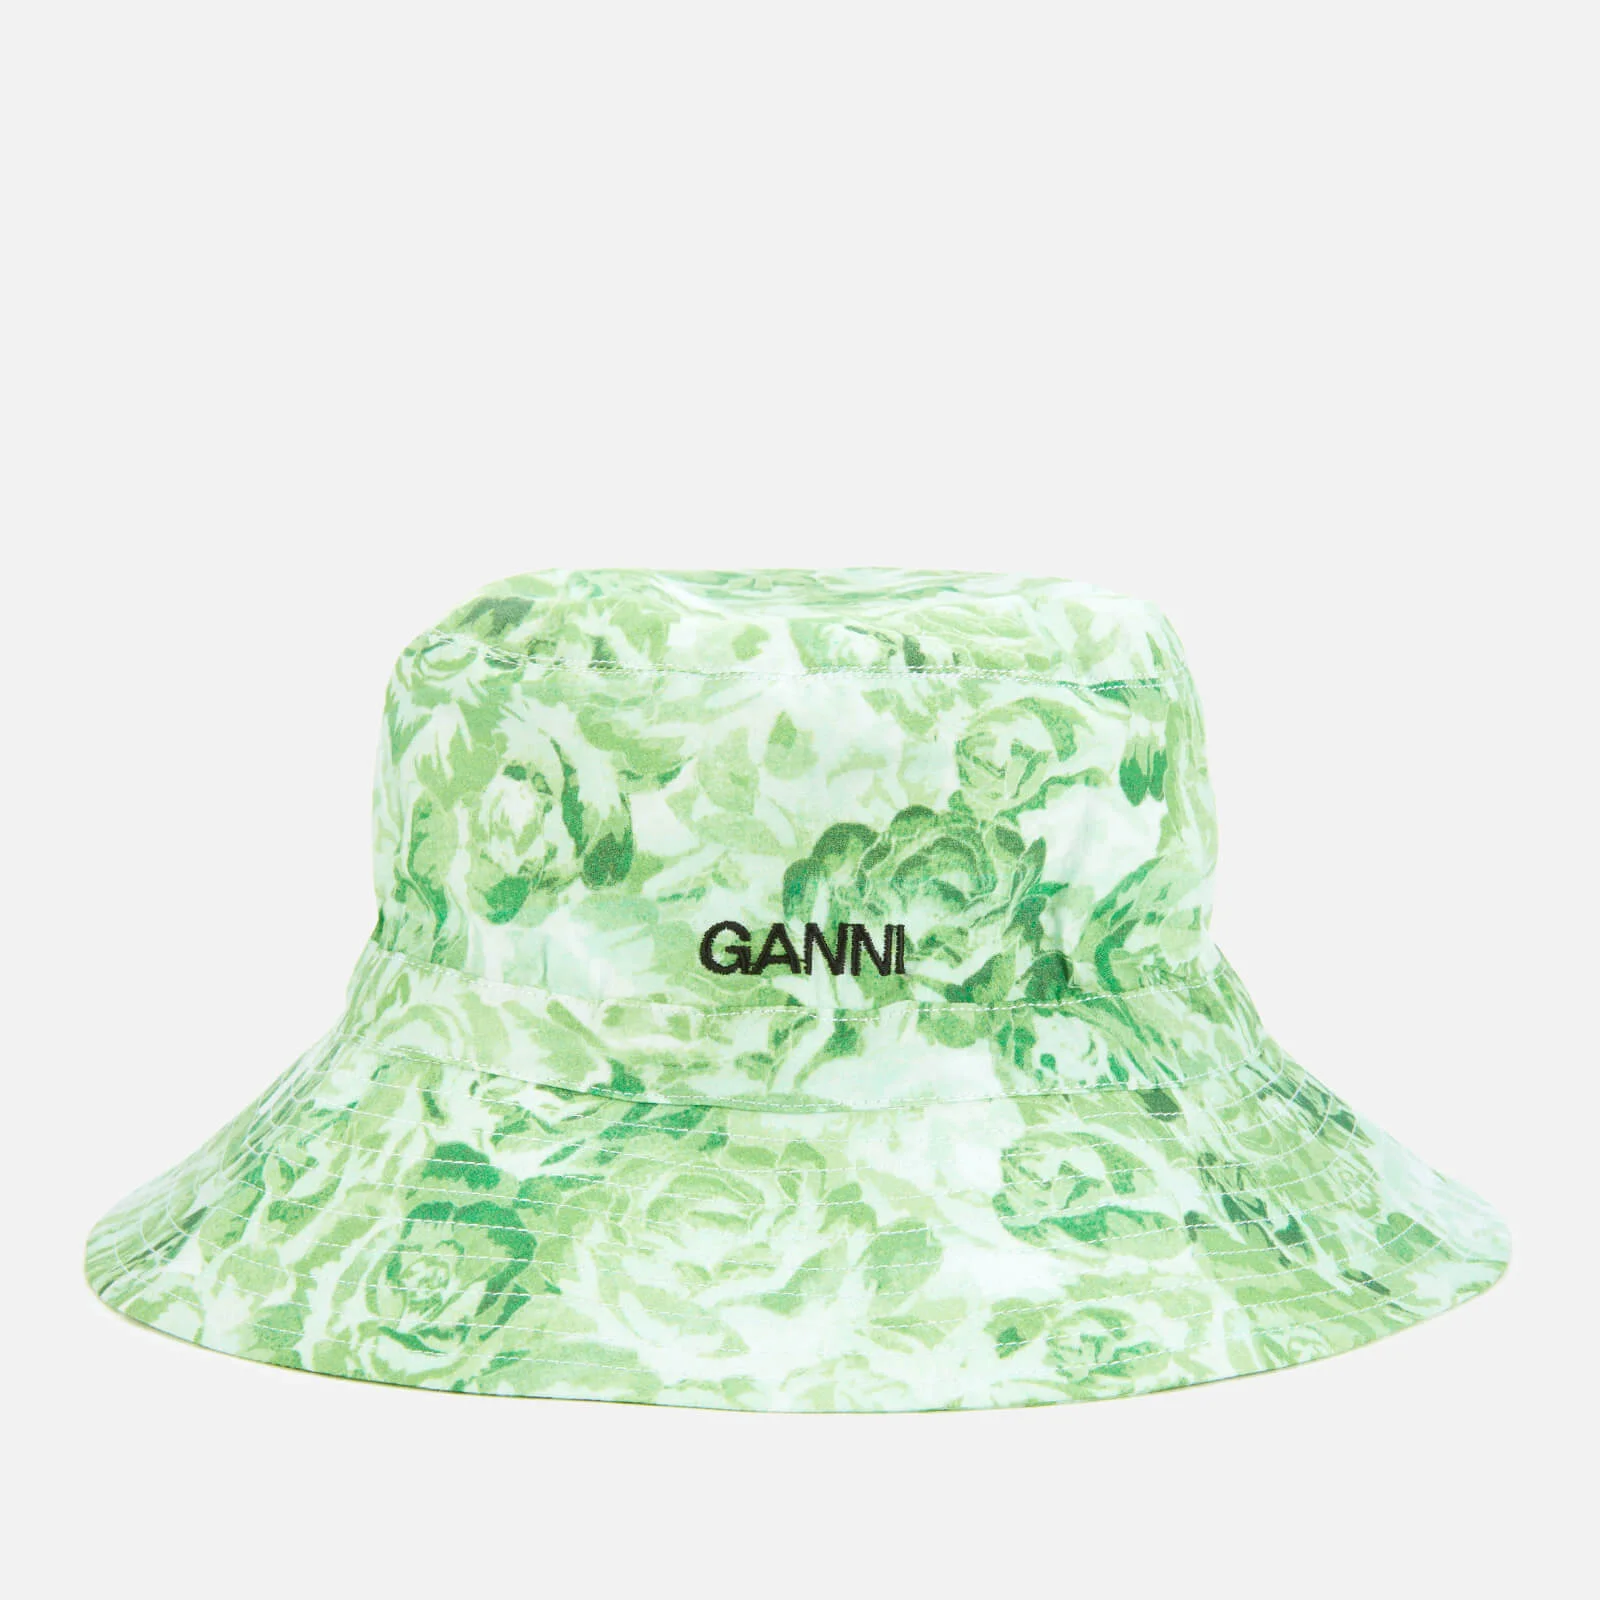 Ganni Women's Printed Bucket Hat - Island Green Image 1